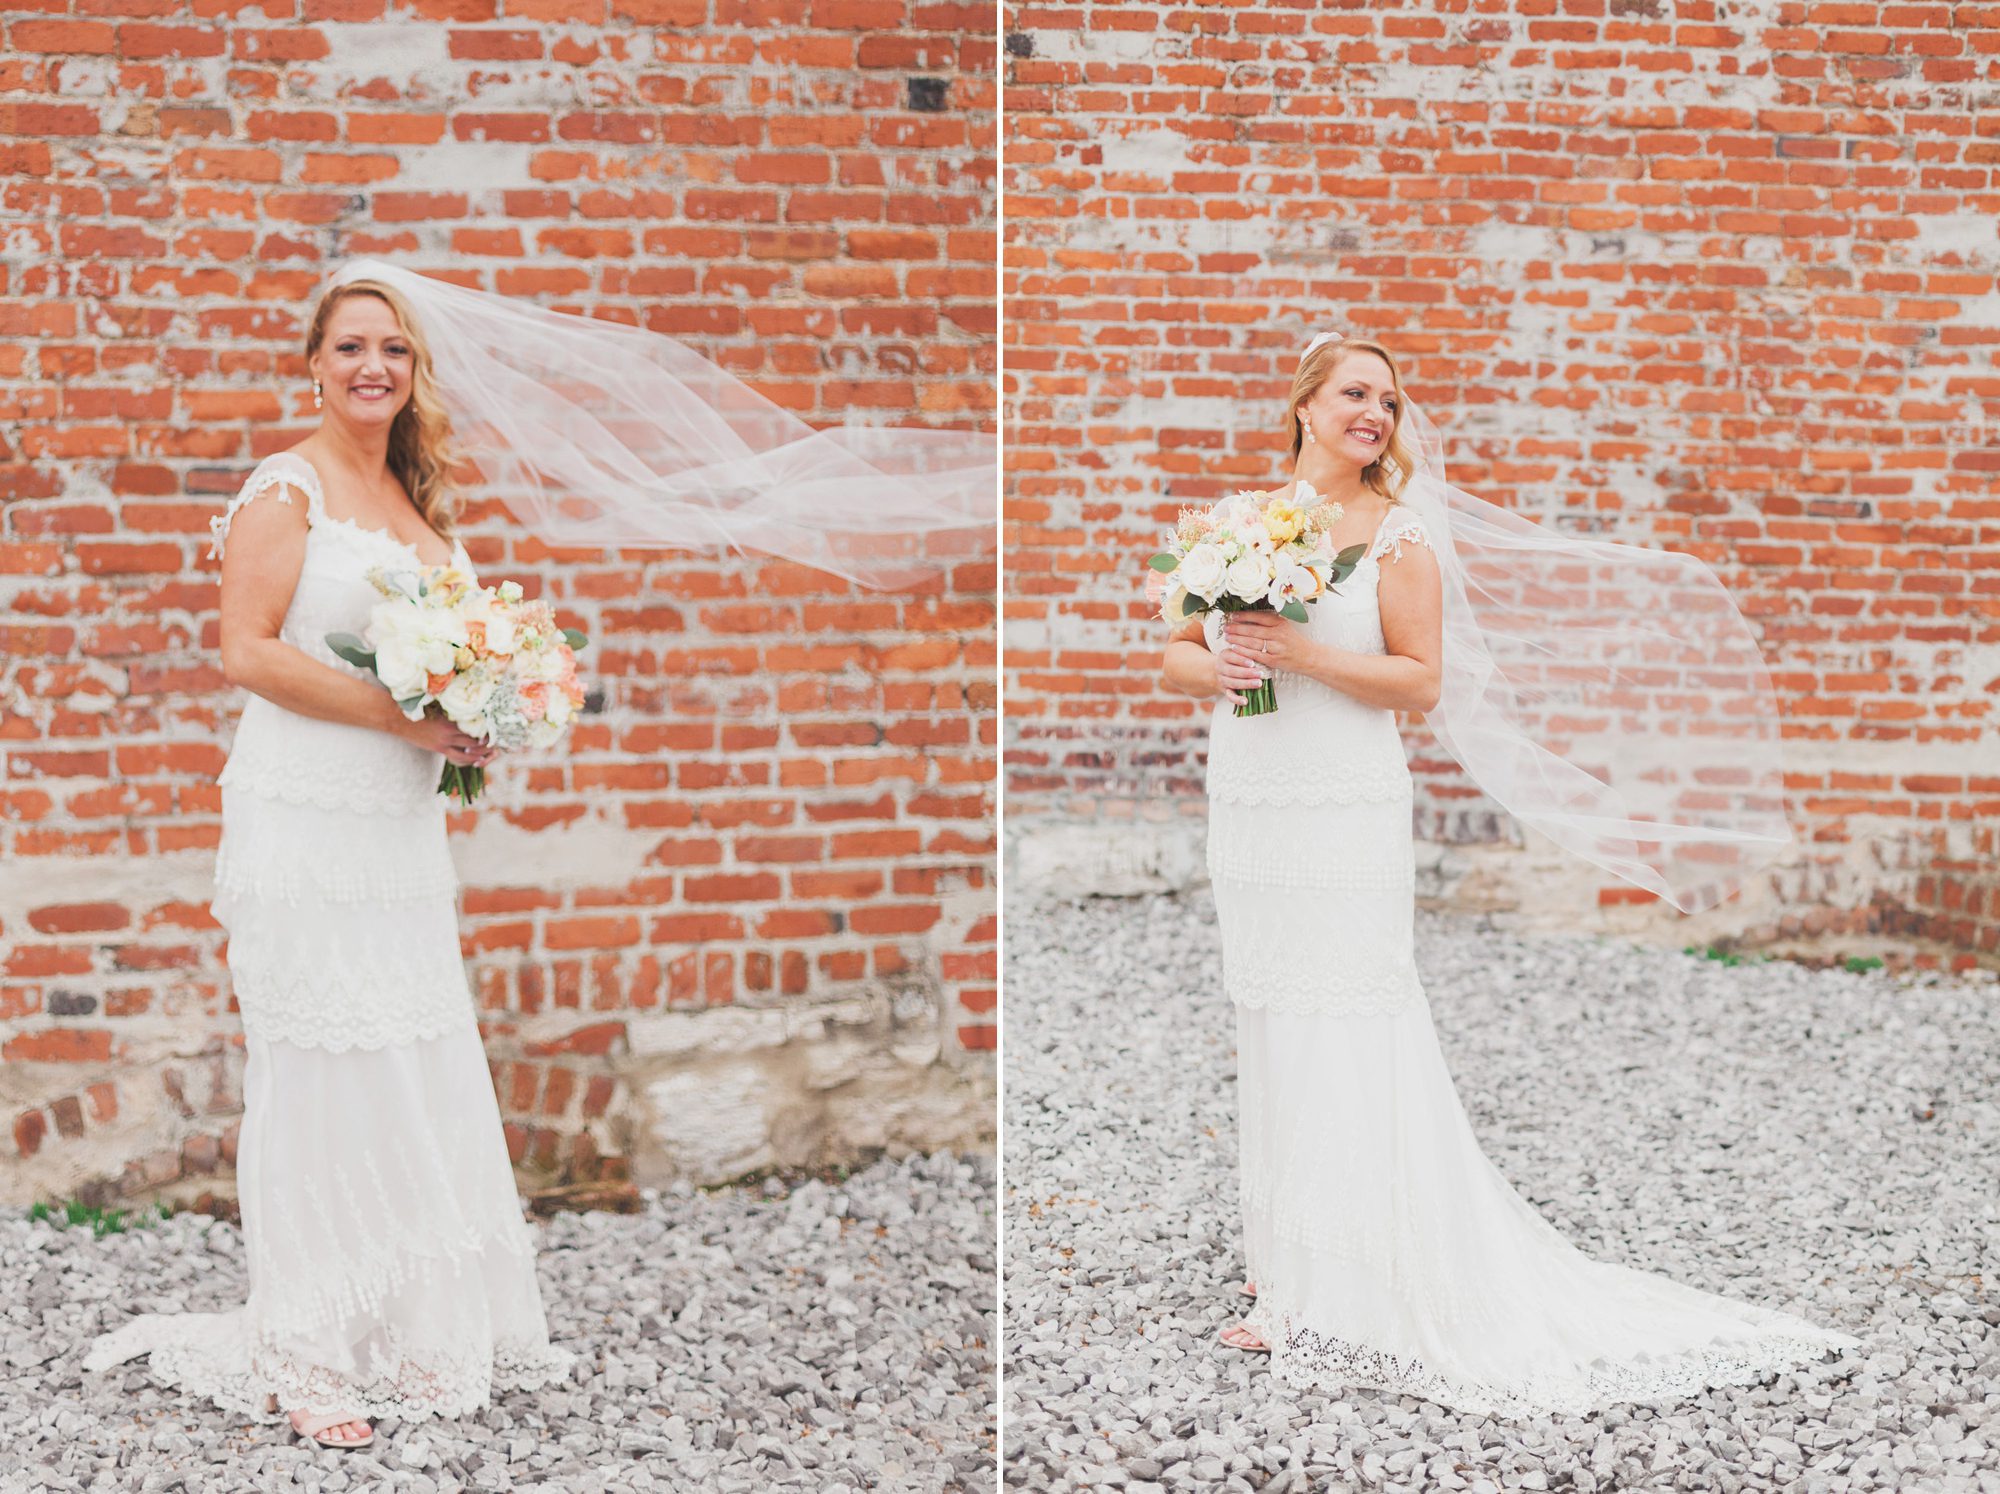 Bridal portraits before wedding ceremony  at Houston Station, Nashville TN. Photos by Krista Lee Photography.